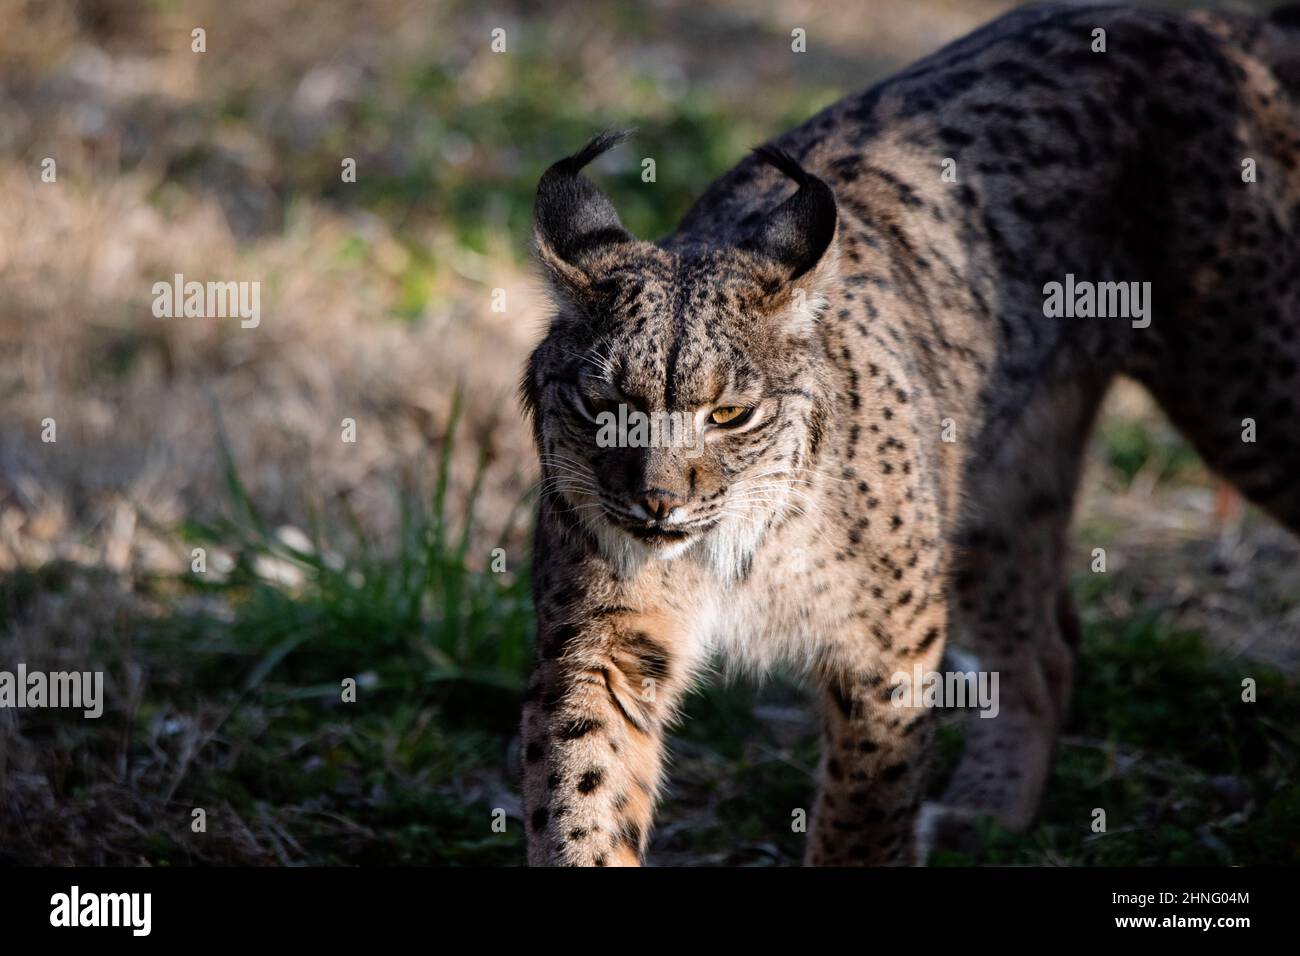 Close up of an Iberian lynx (Lynx pardinus), a wild cat species native to the Iberian Peninsula Stock Photo